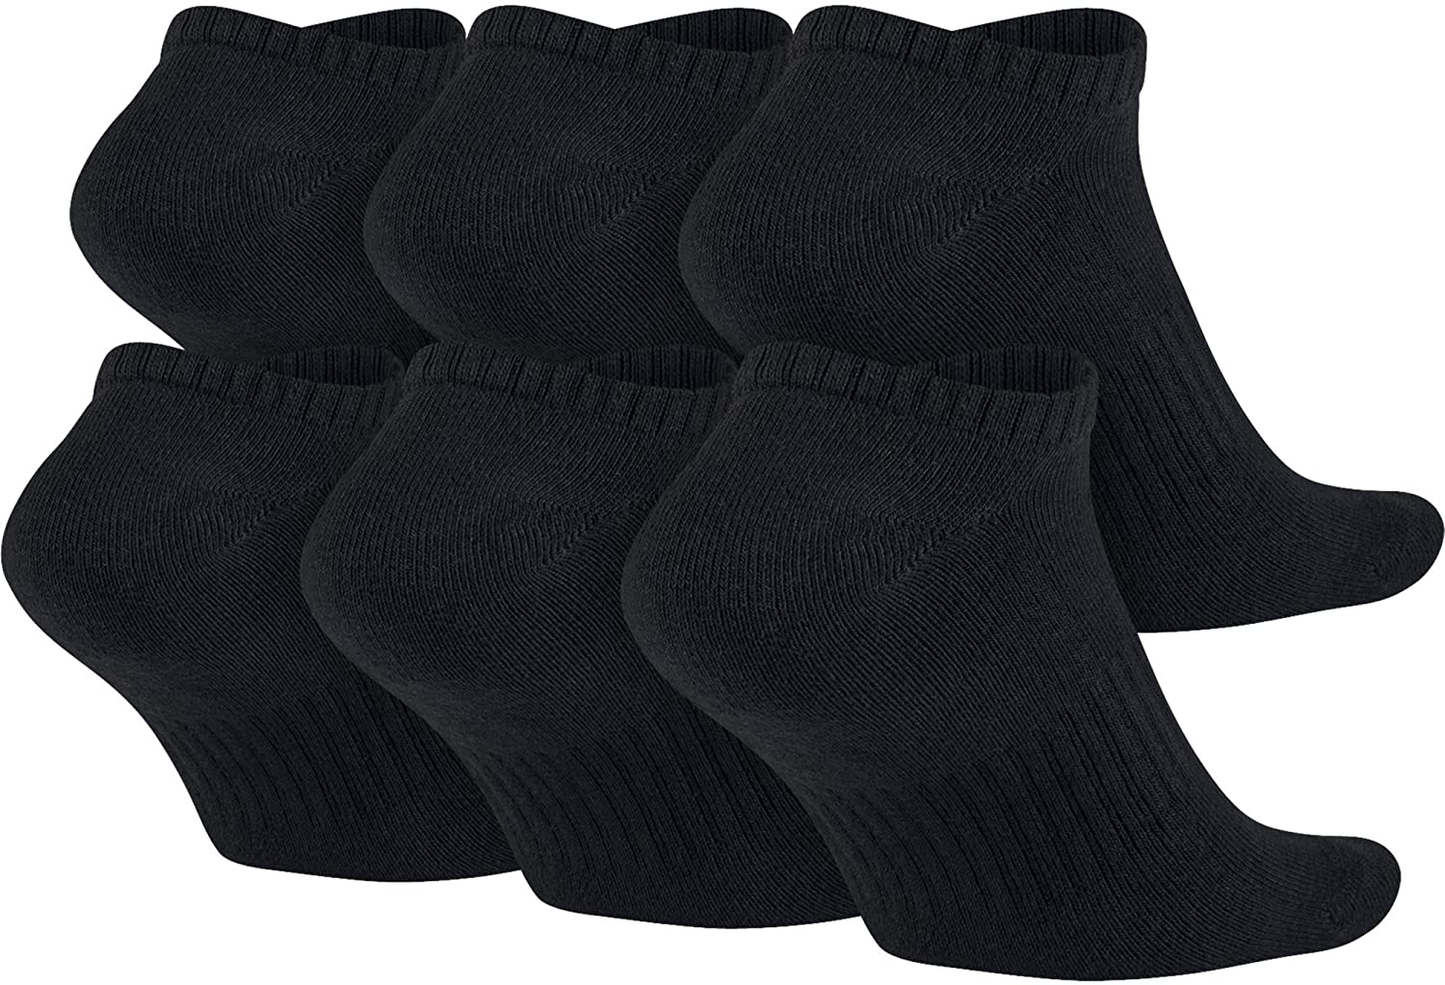 Nike Performance Cushion No-Show Black/White Socks with Band (6 Pairs)